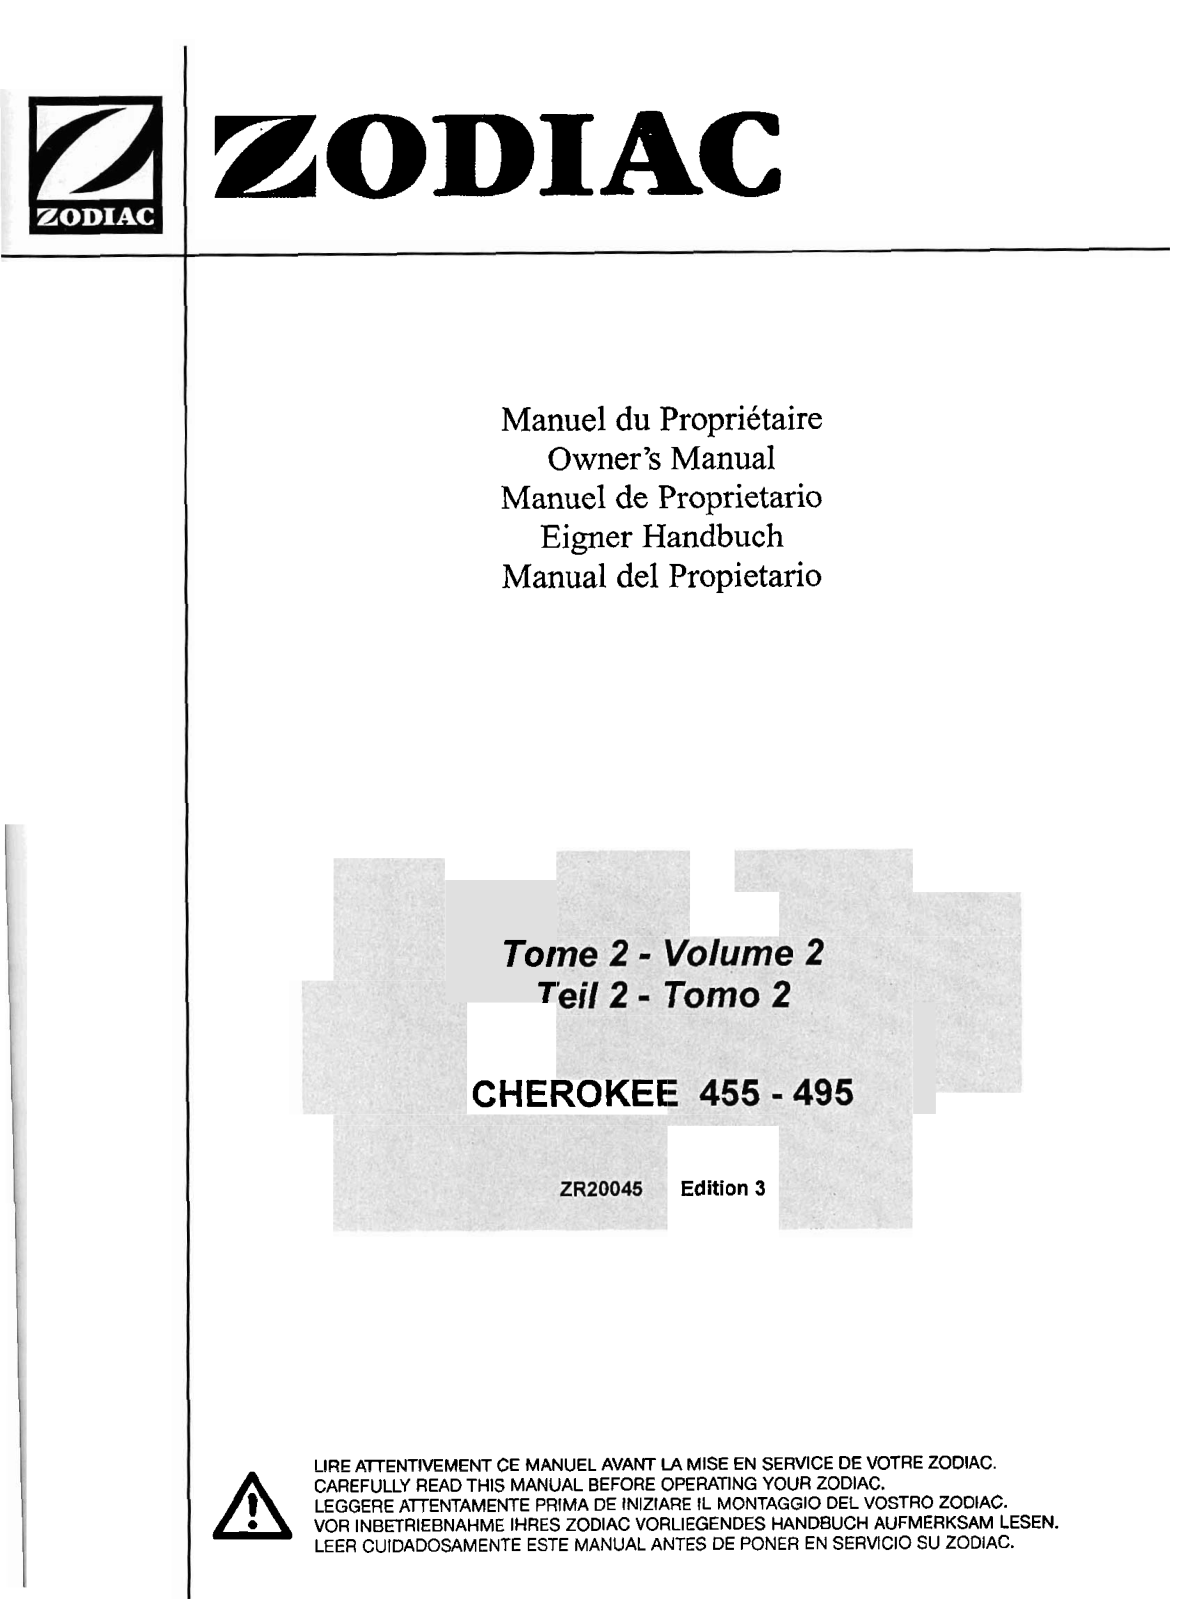 ZODIAC CHEROKEE 495 User Manual